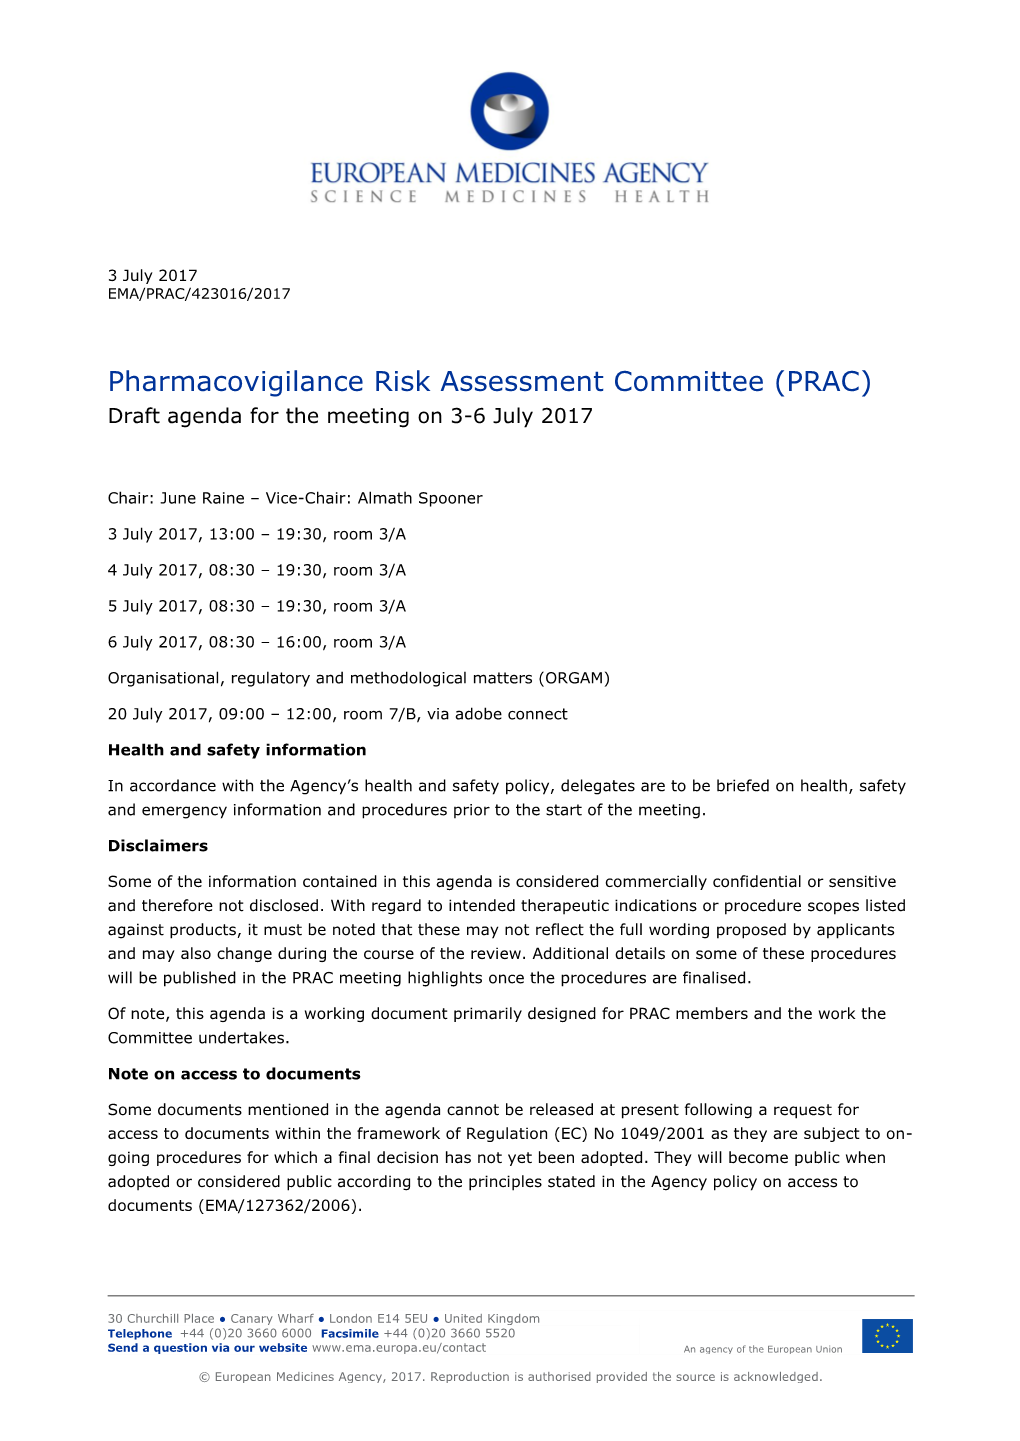 PRAC Draft Agenda of Meeting on 3-6 July 2017